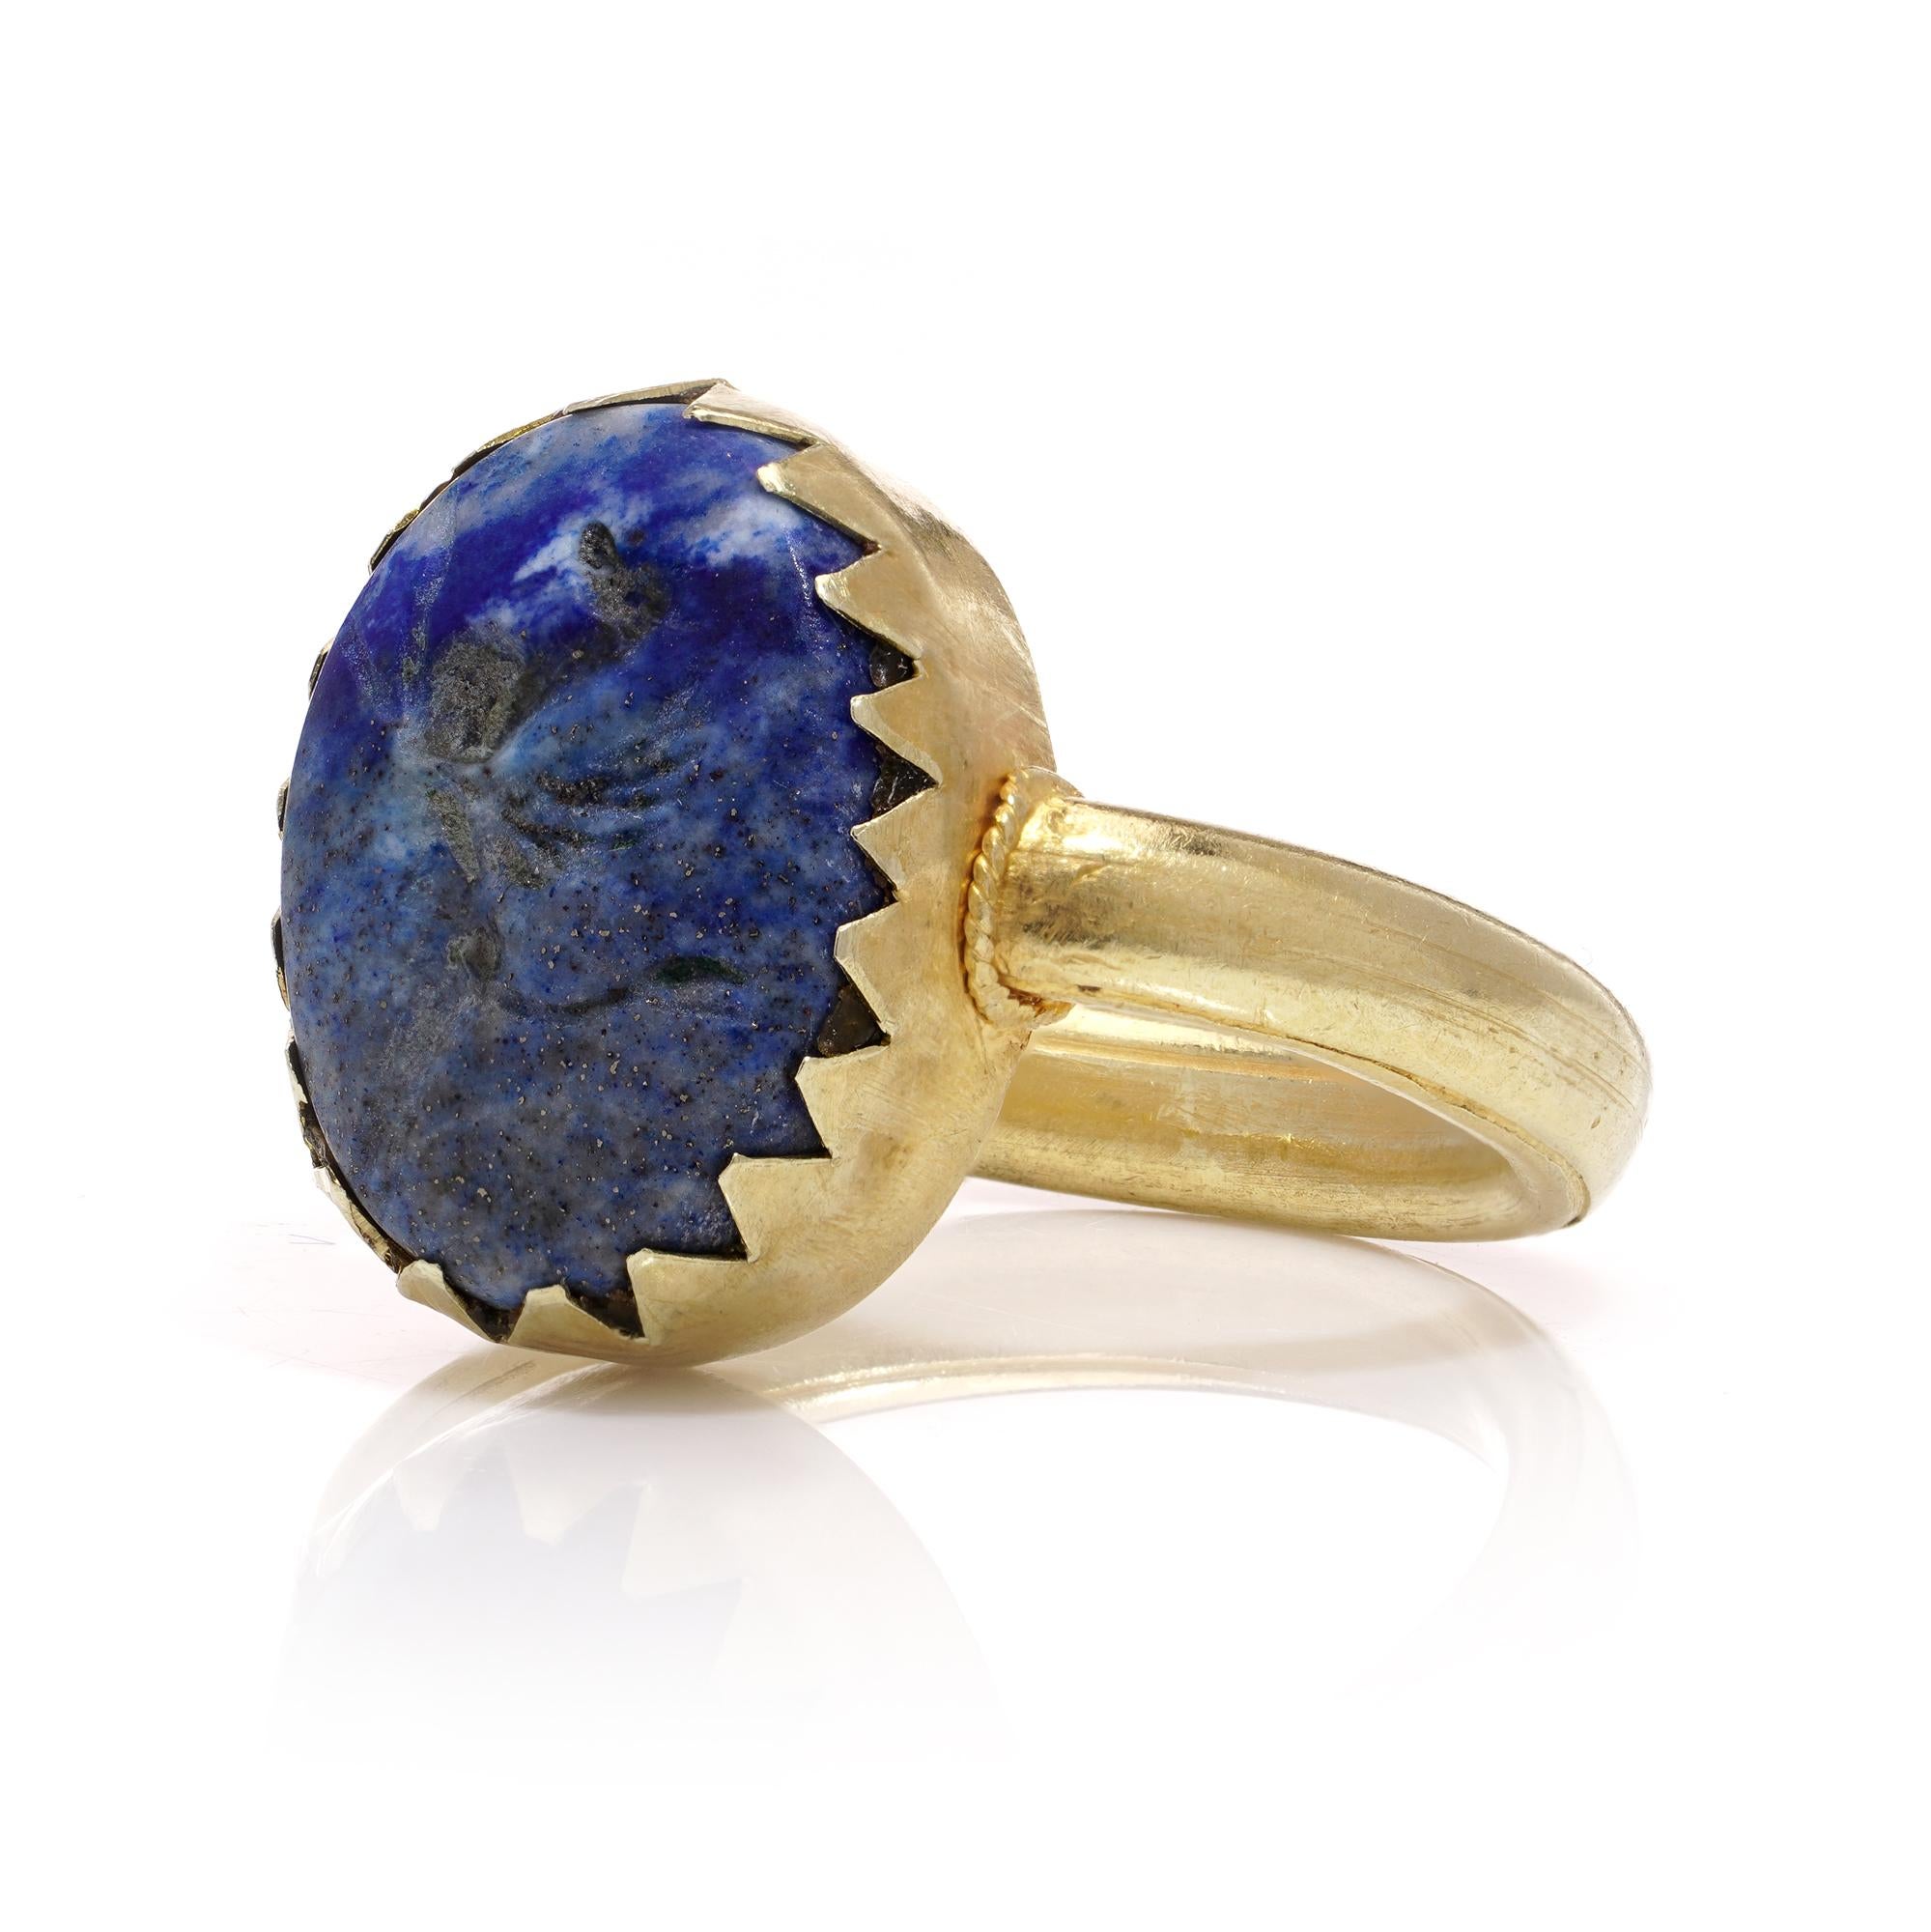 Antique 19th Century 18kt gold lapis lazuli intaglio ring with pegasus carving For Sale 1